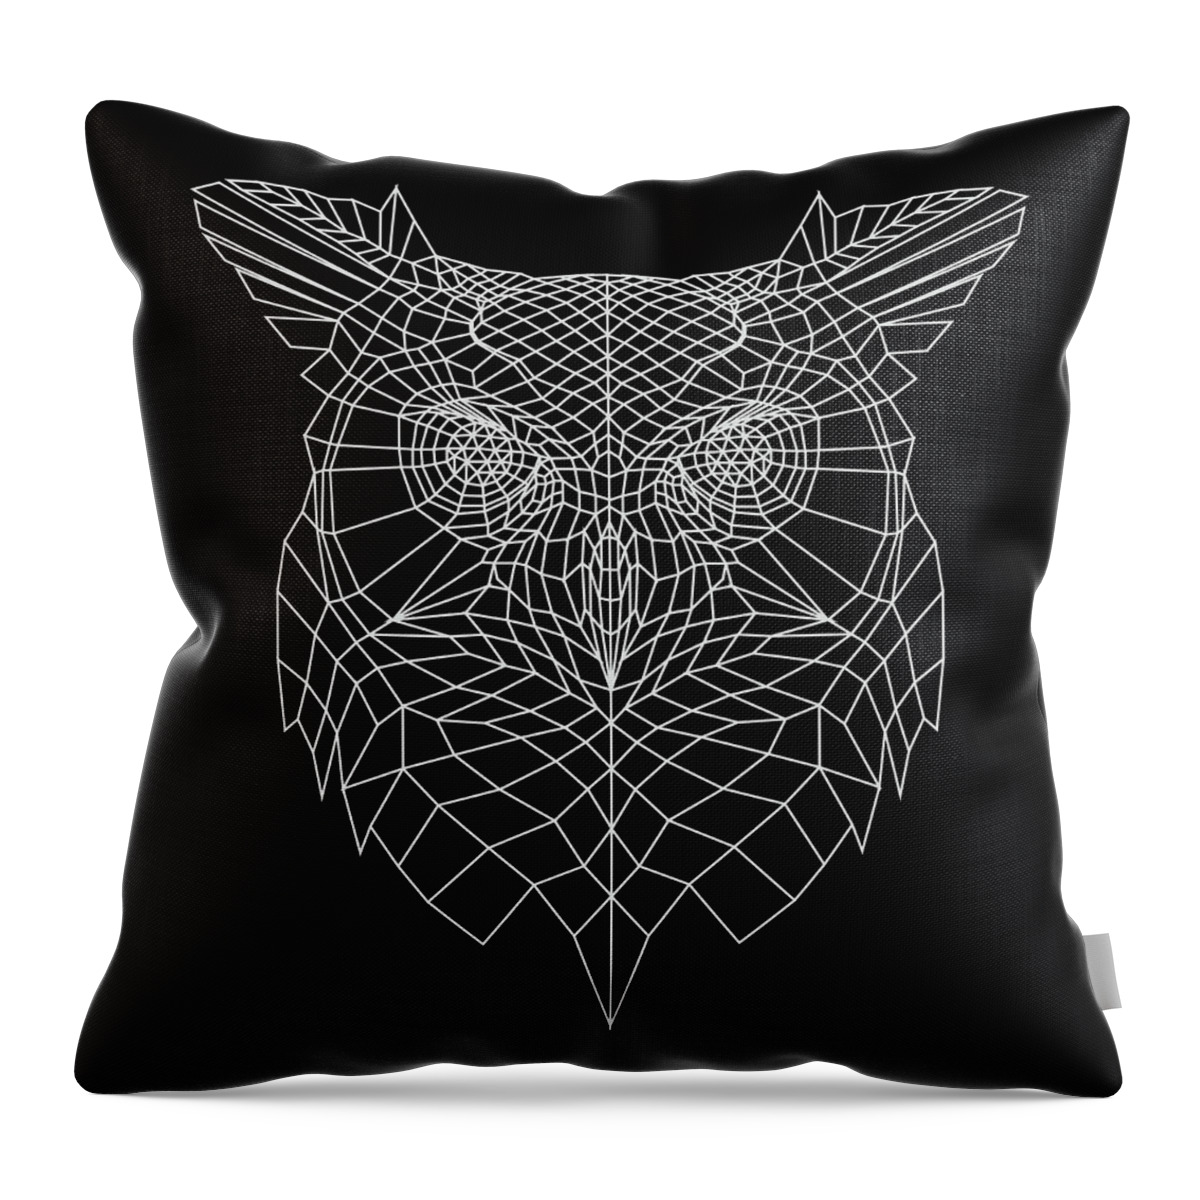 Owl Throw Pillow featuring the digital art Night Owl #1 by Naxart Studio